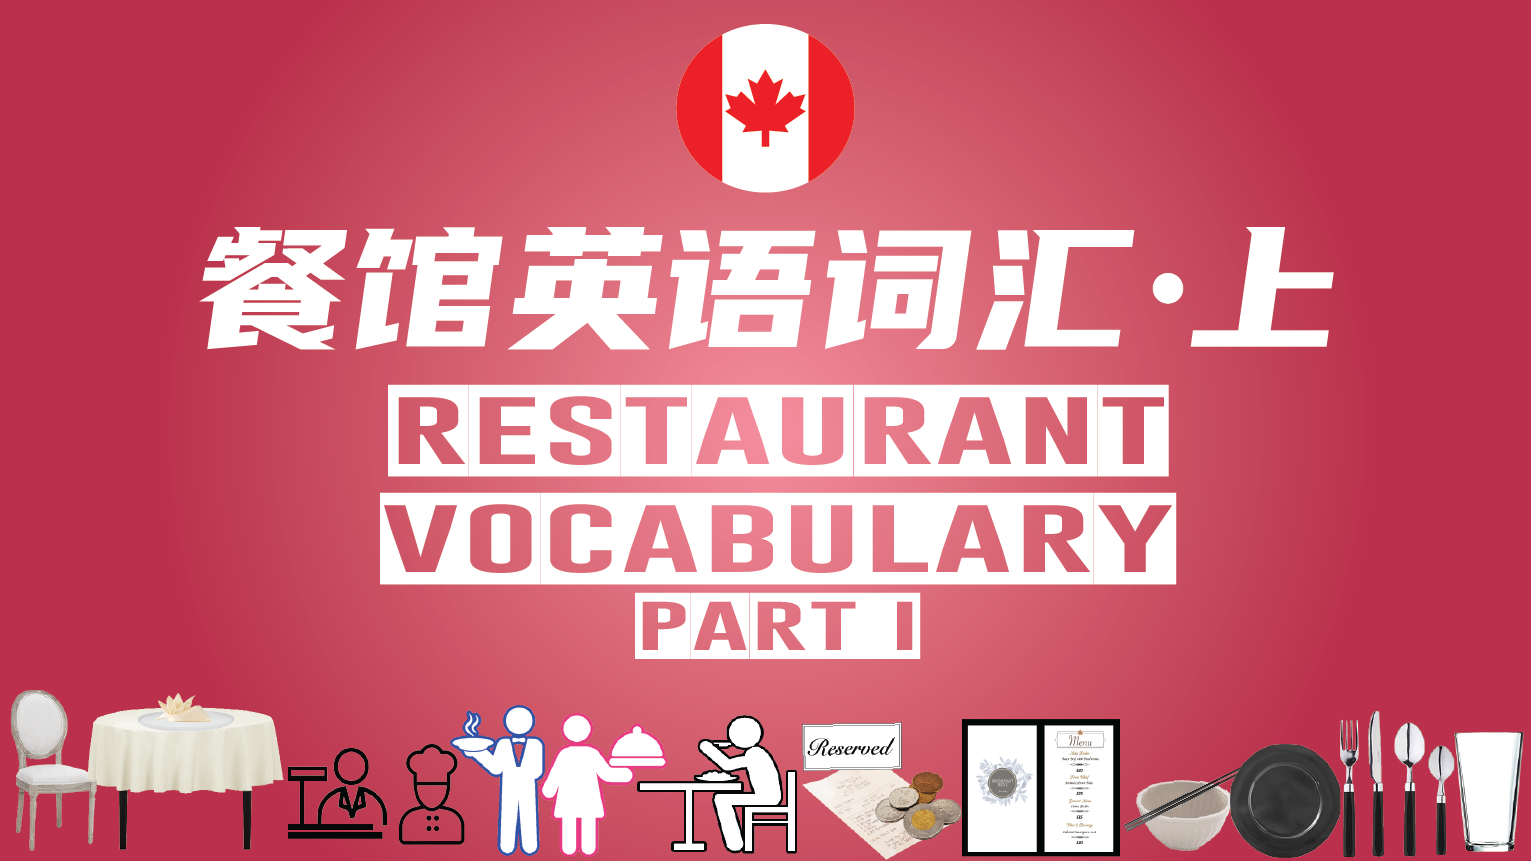 Restaurant Vocabulary - Part 1